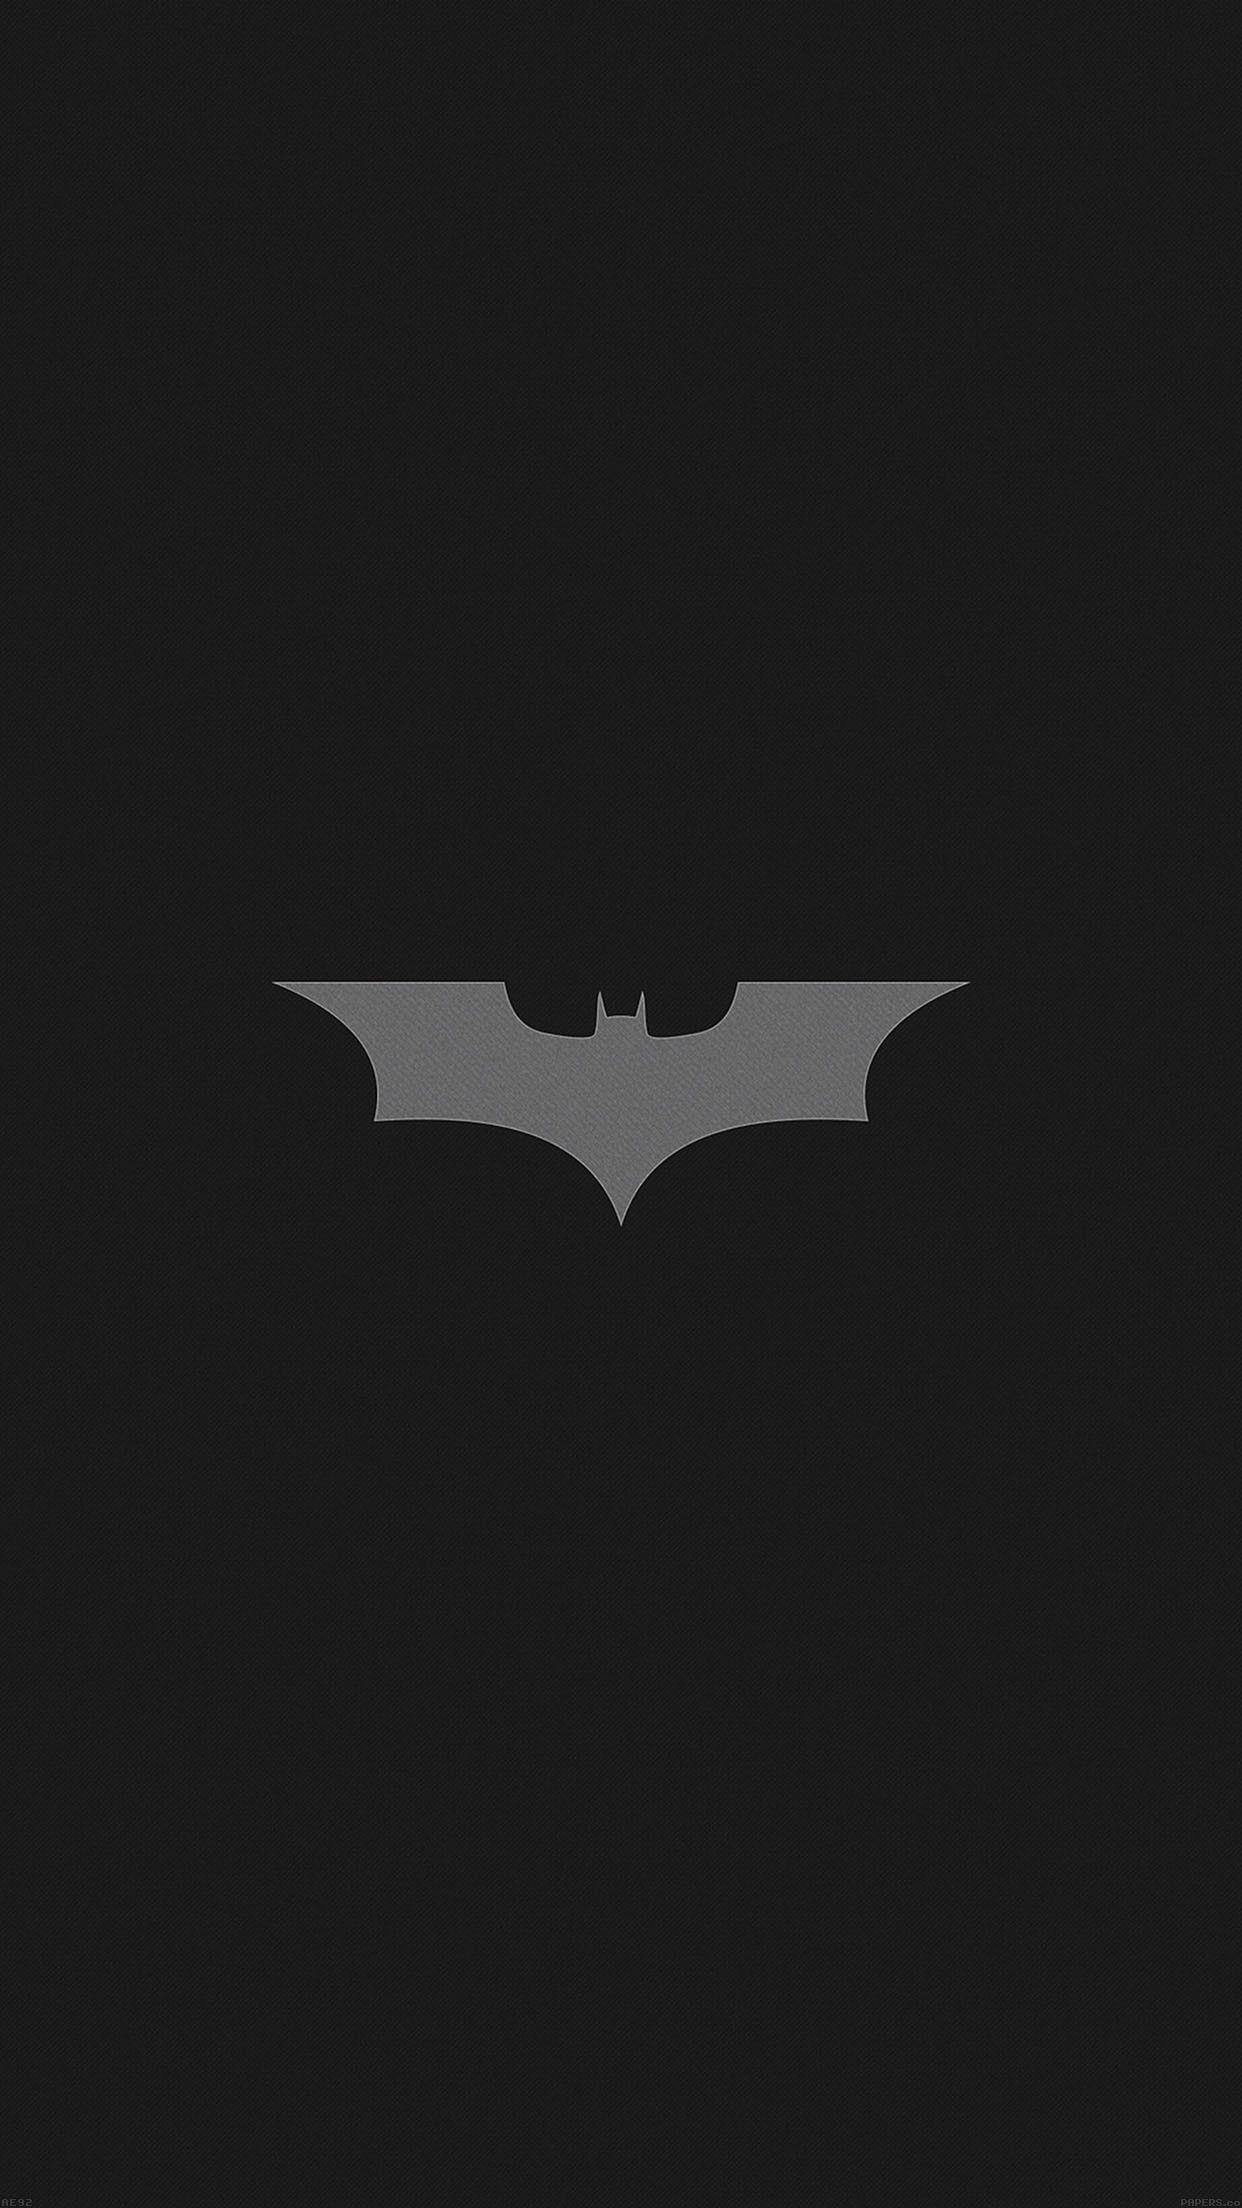 Batman IPhone Wallpaper High Quality. Papel de parede do batman